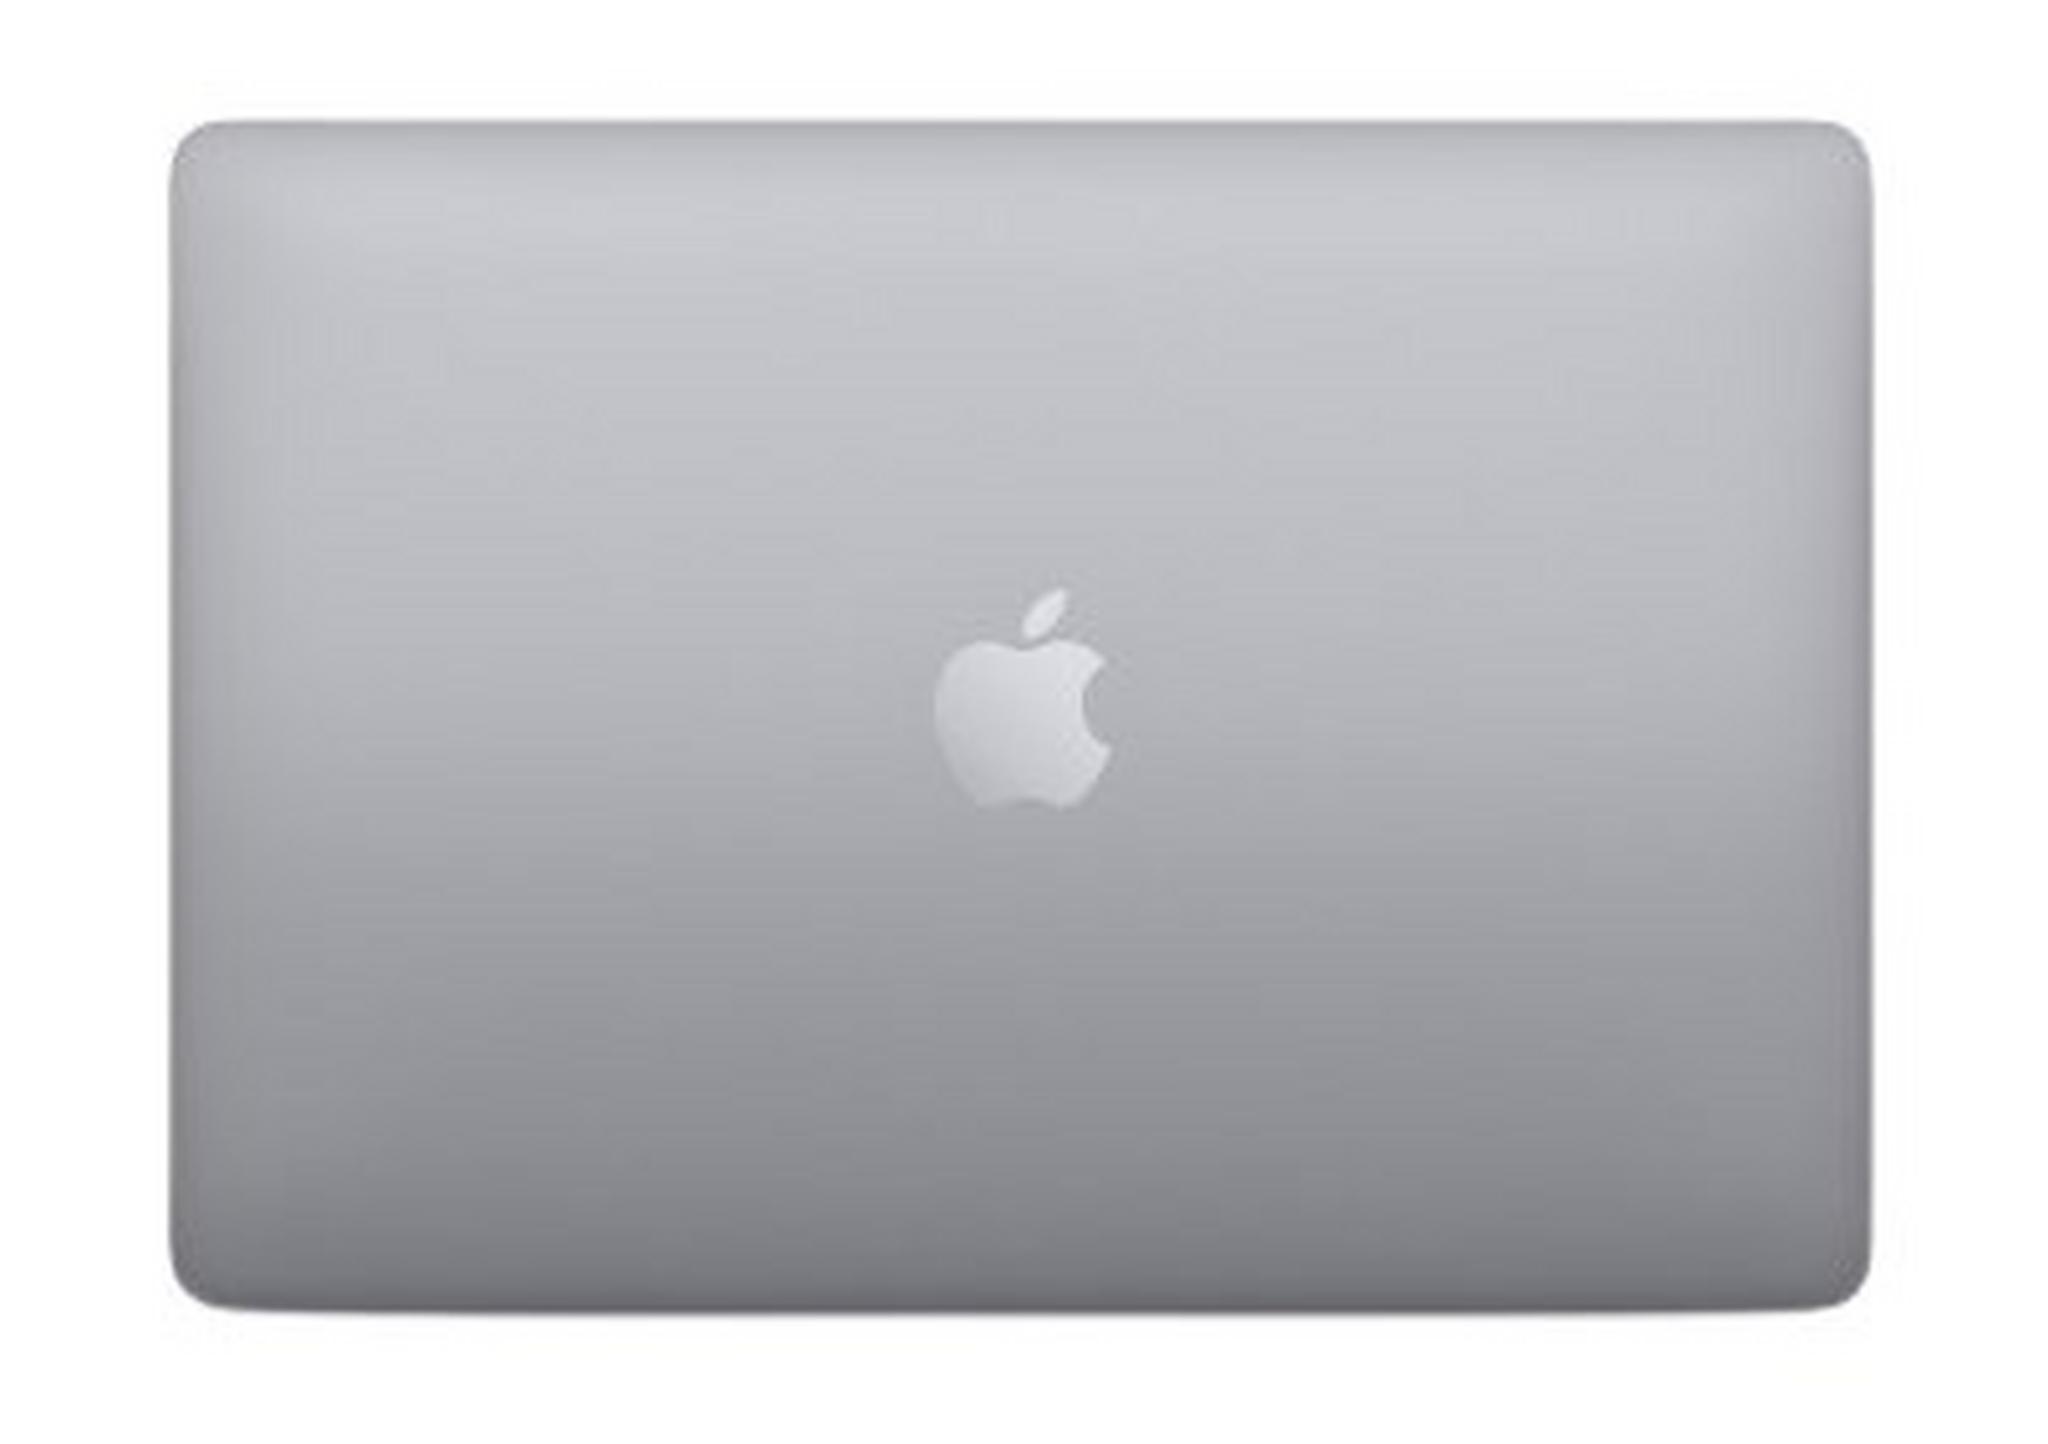 Apple Macbook Pro 8th Gen Core i5 8GB RAM 512GB SSD 13.3-inch Laptop (MXK52AB/A) - Space Grey